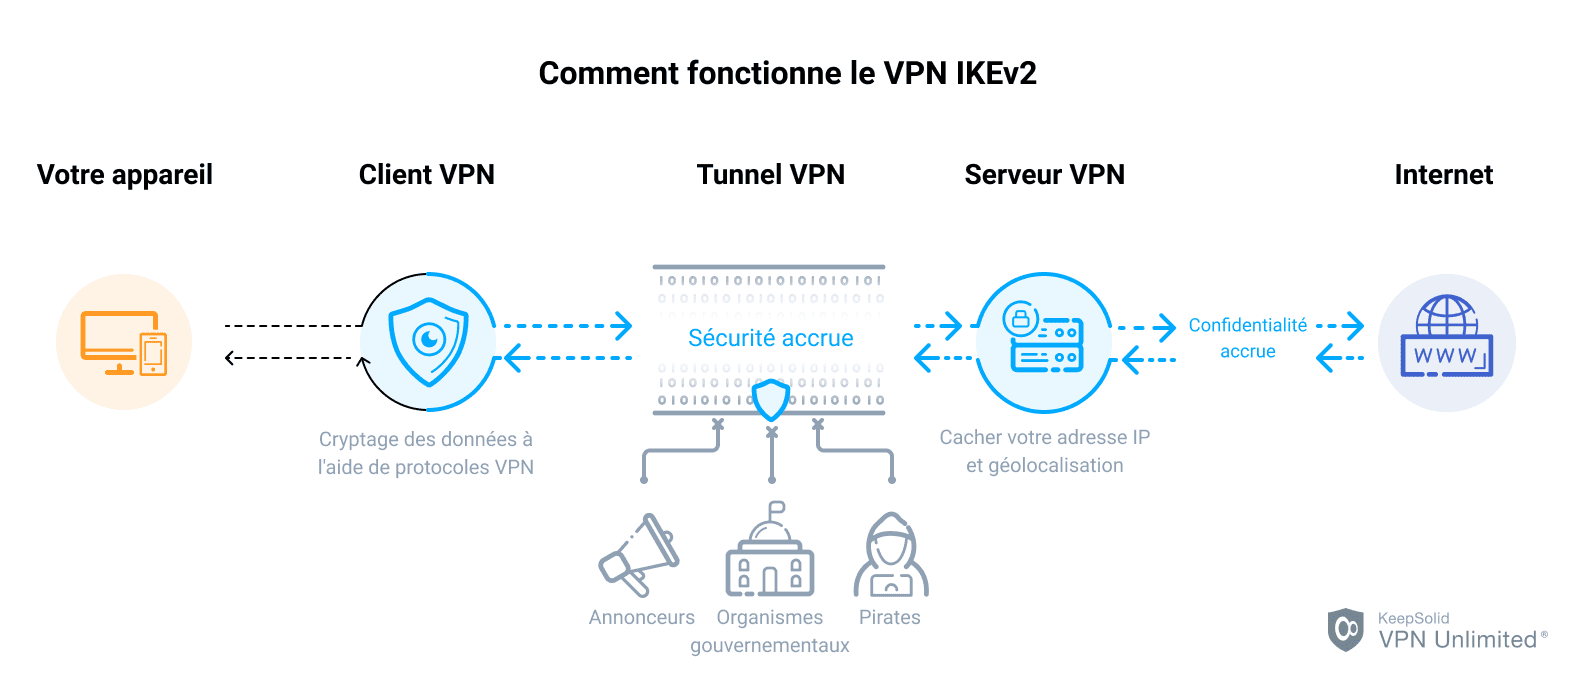 Comment fonctionne le VPN IKEv2